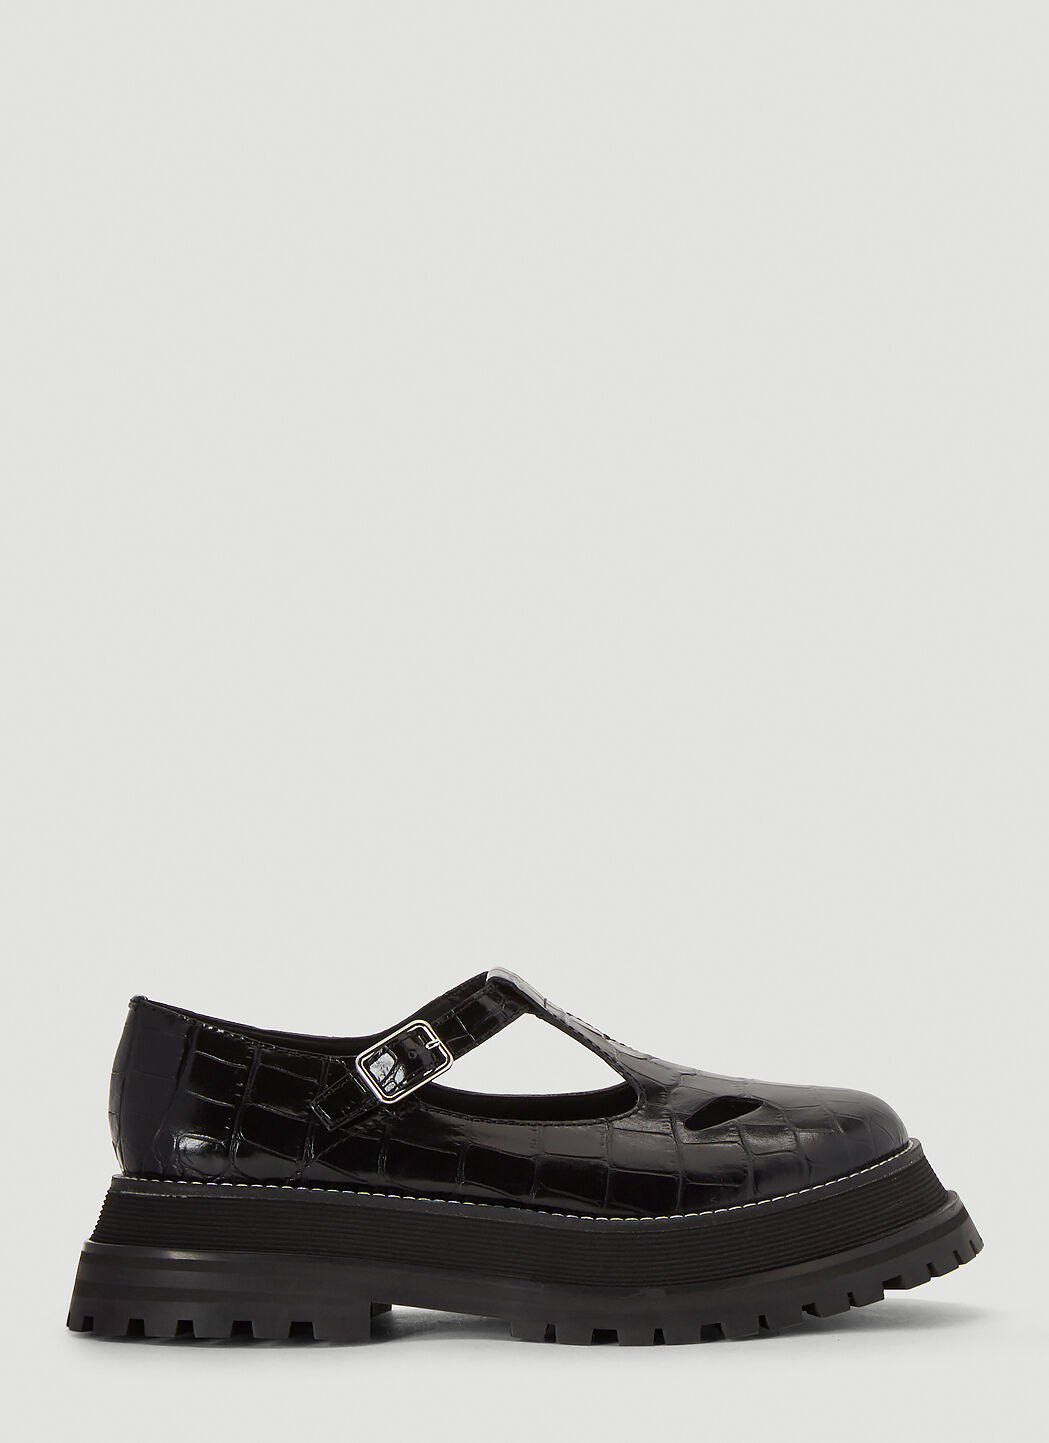 Saint Laurent Embossed Leather Mary Jane Shoes 黑色 sla0238013